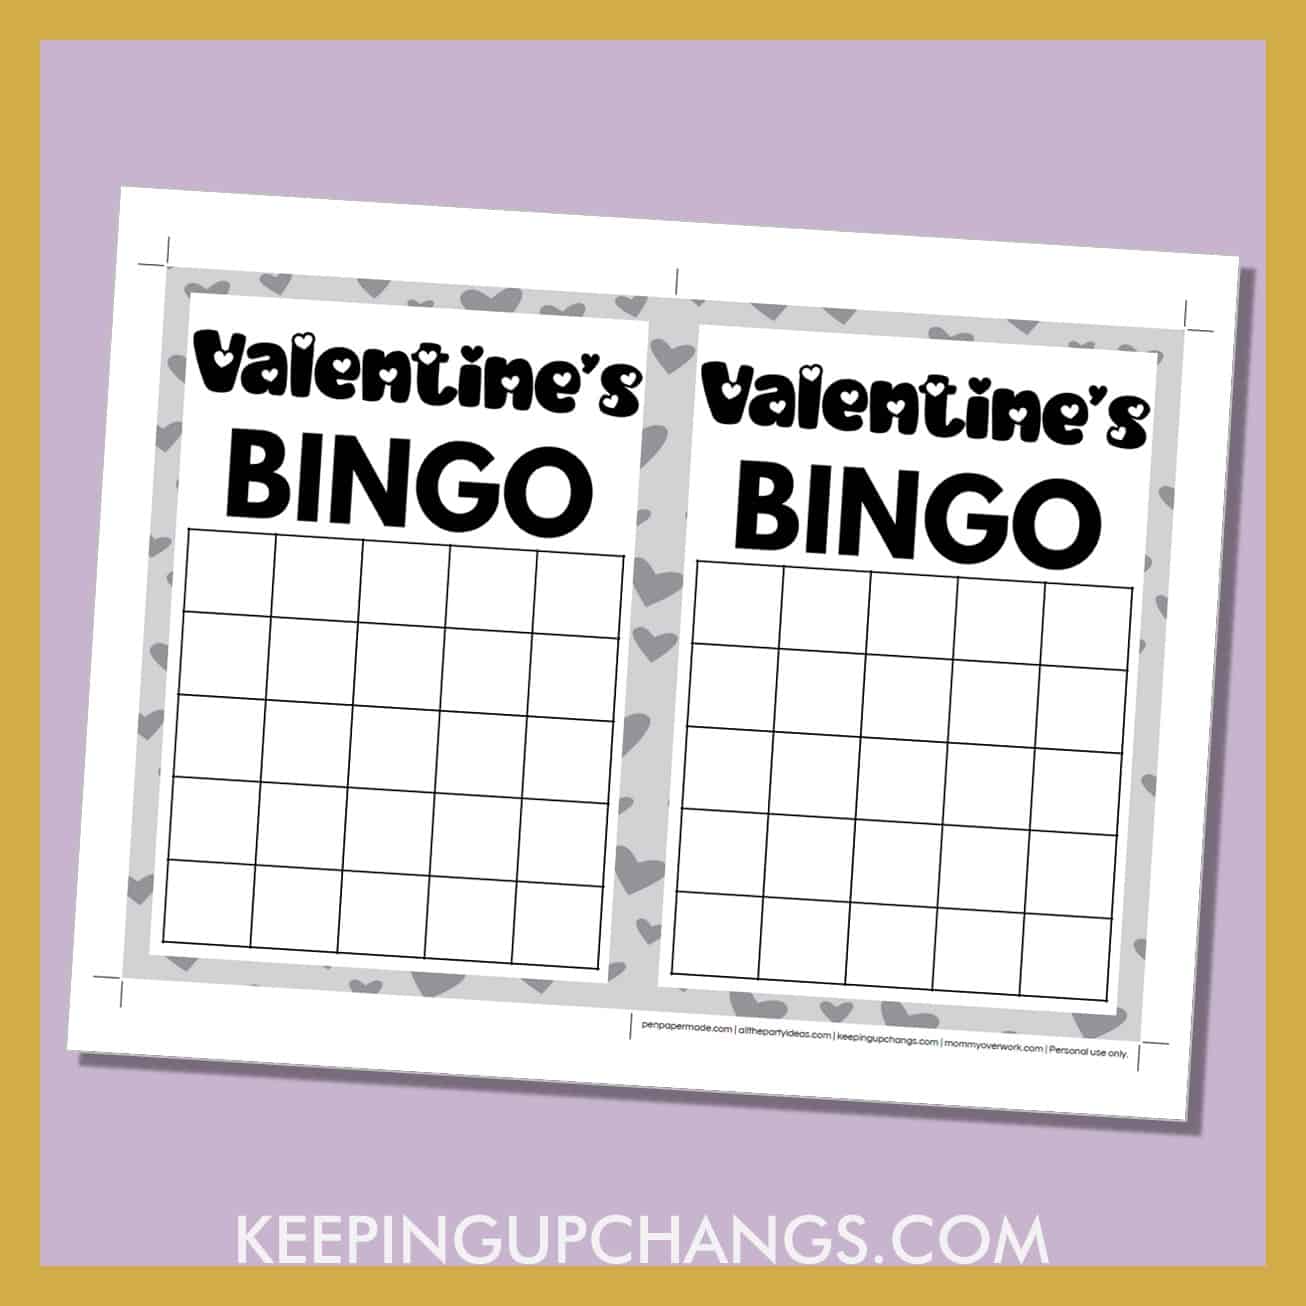 free valentine's day bingo 5x5 grid black white game board blank template.